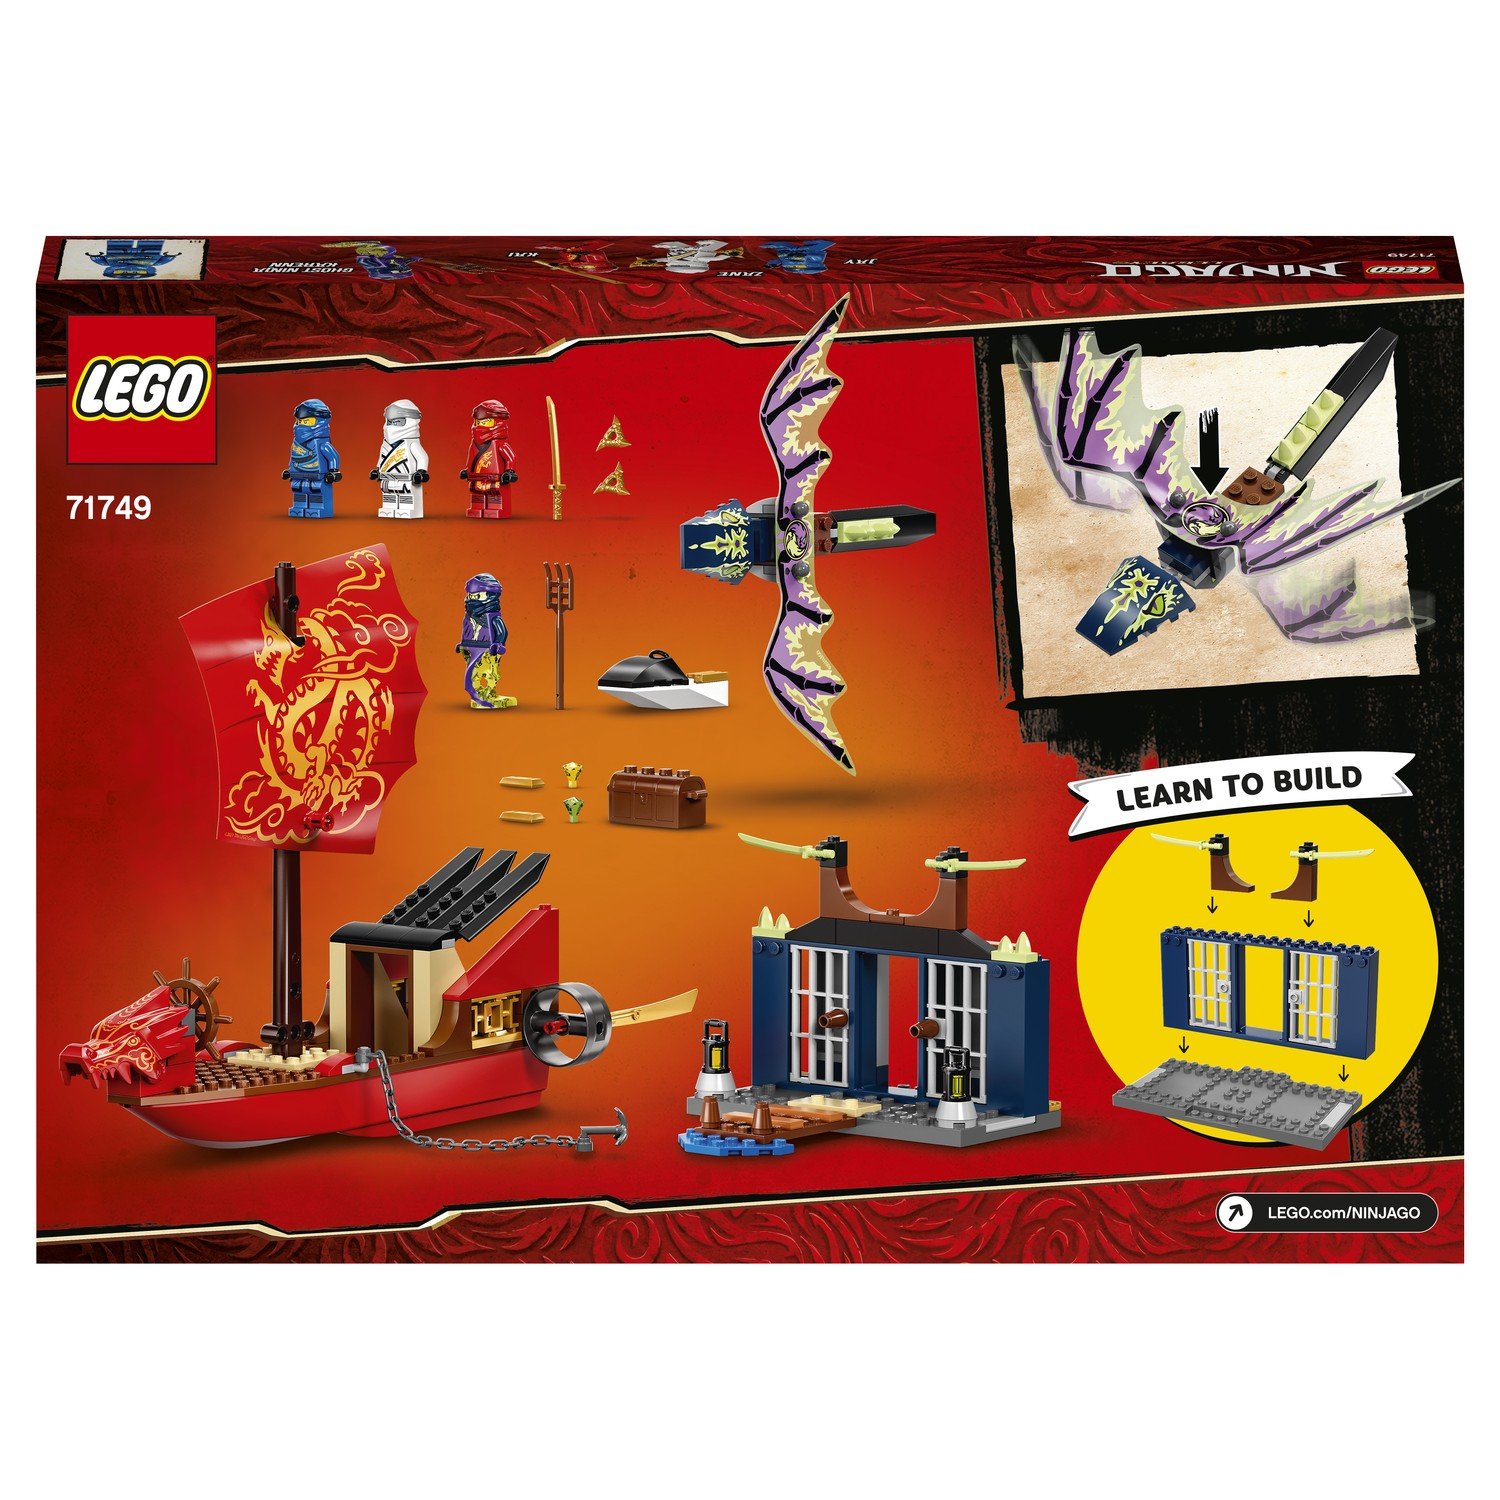 Lego Ninjago 71749 «Дар Судьбы» Решающая битва